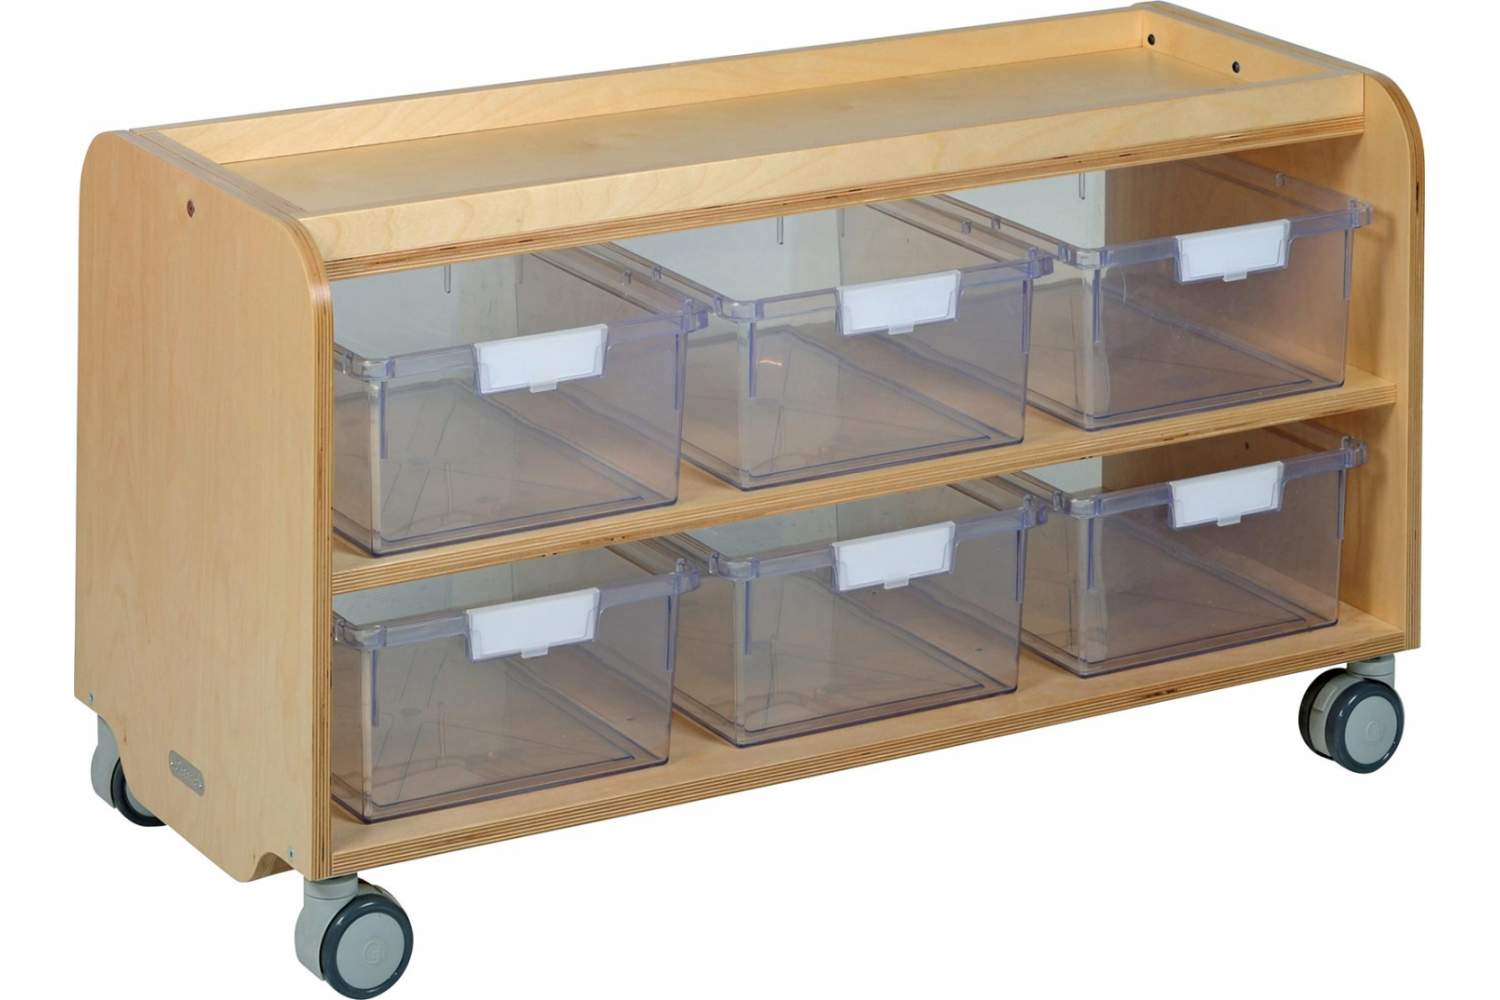 Storage unit for schools